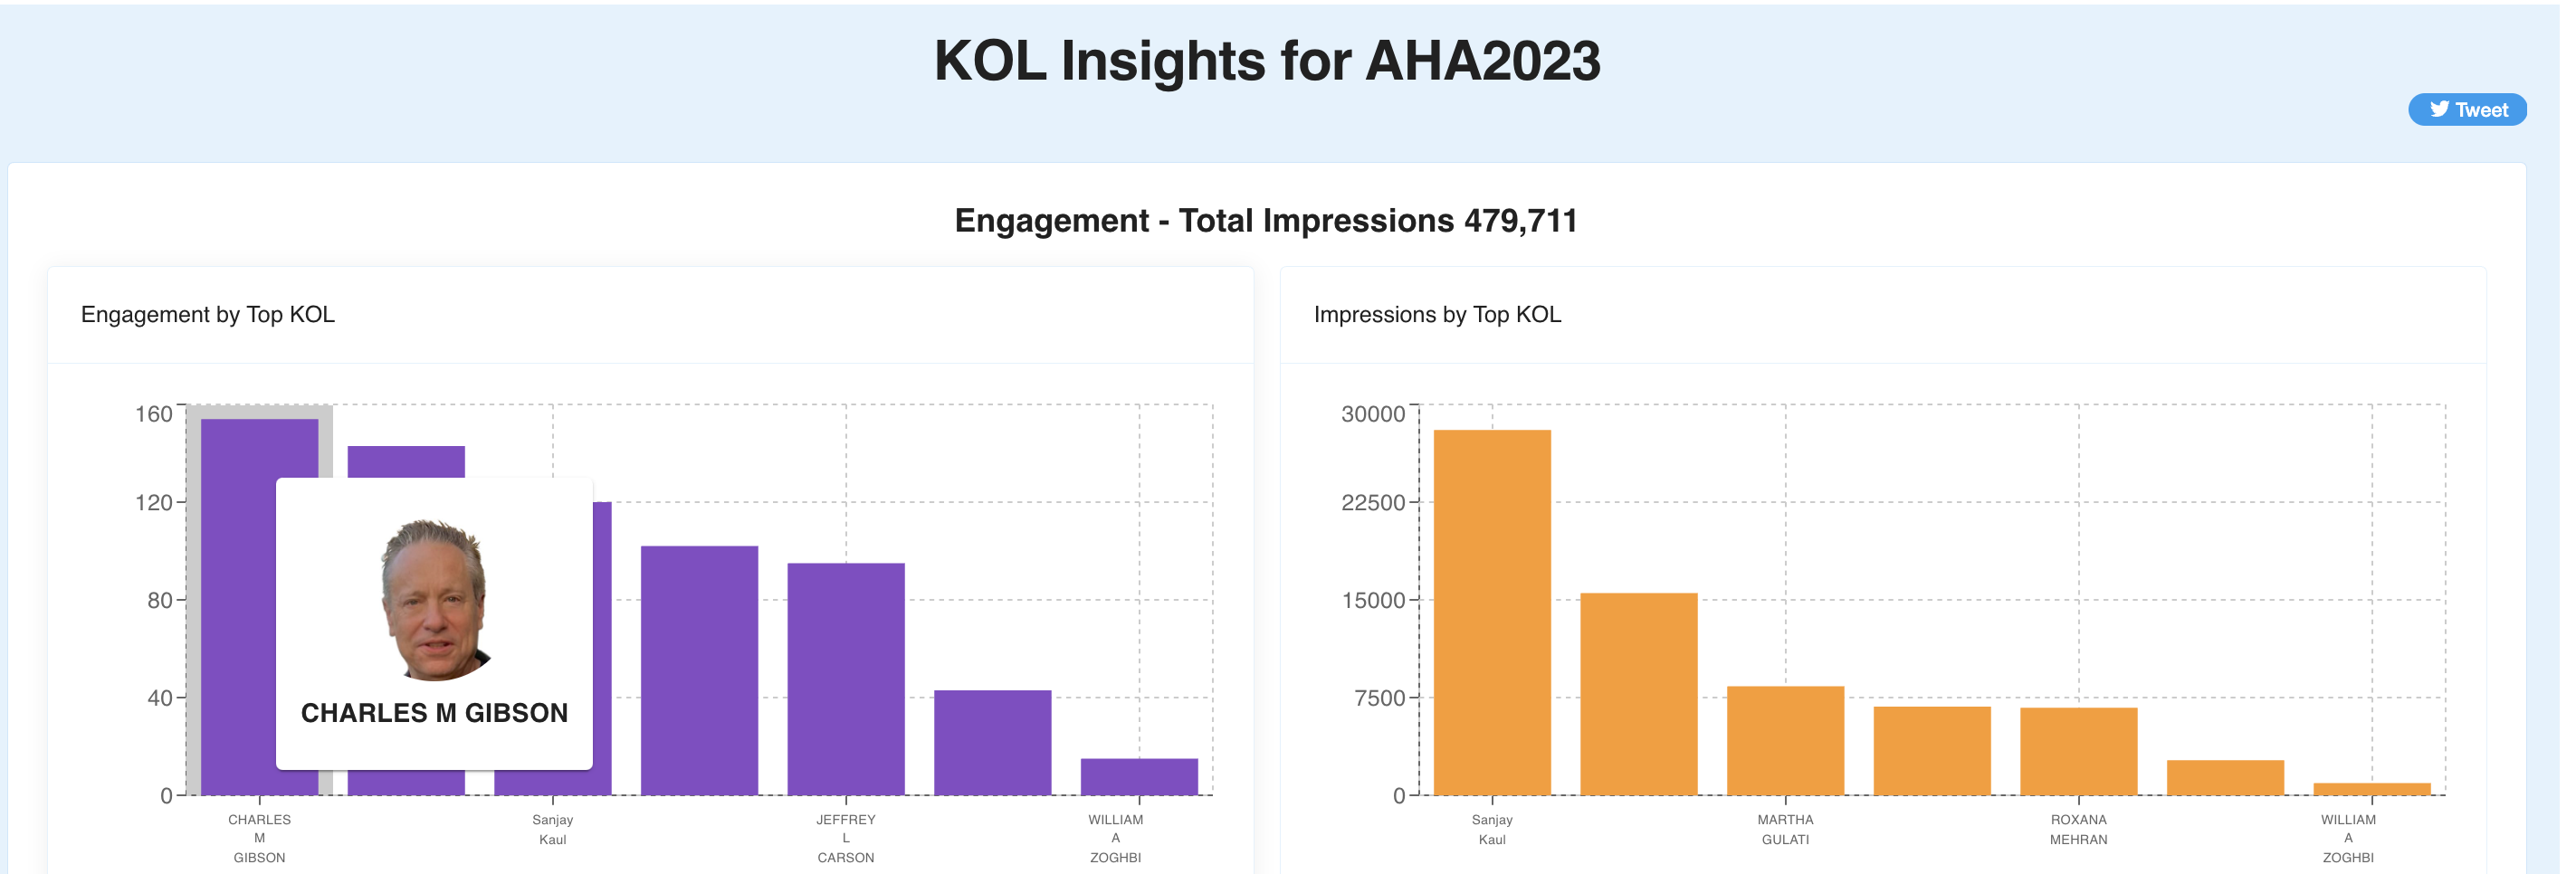 KOL Insights for AHA2023